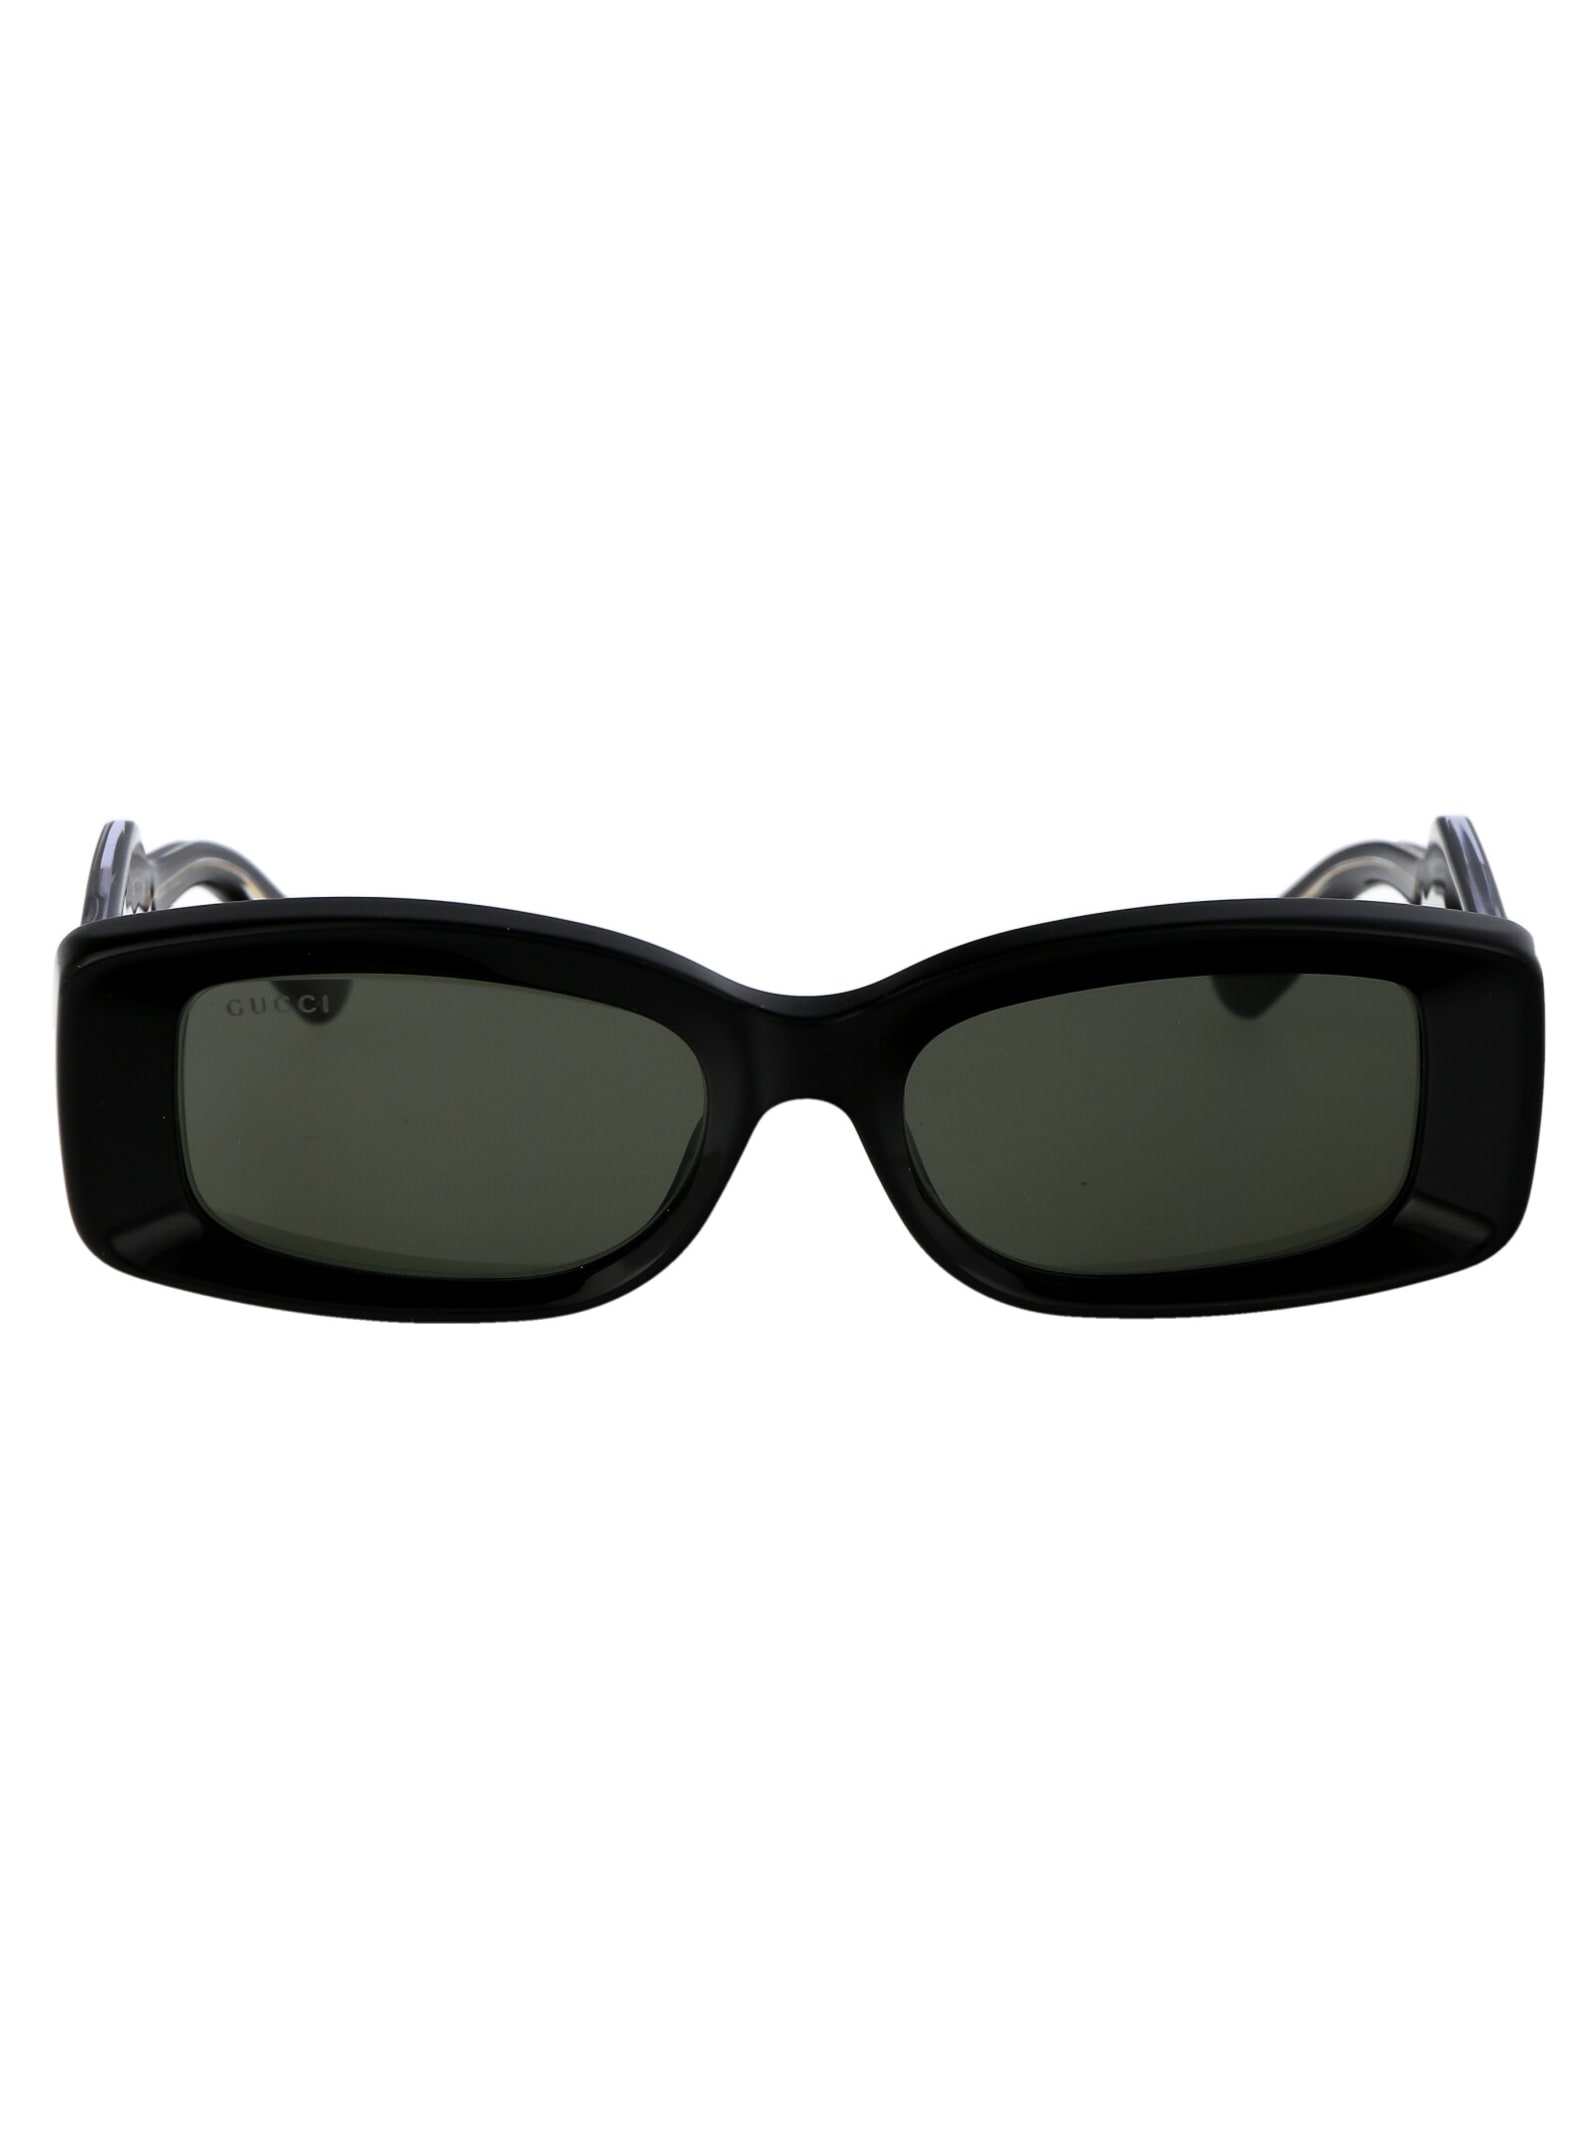 Gg1528s Sunglasses